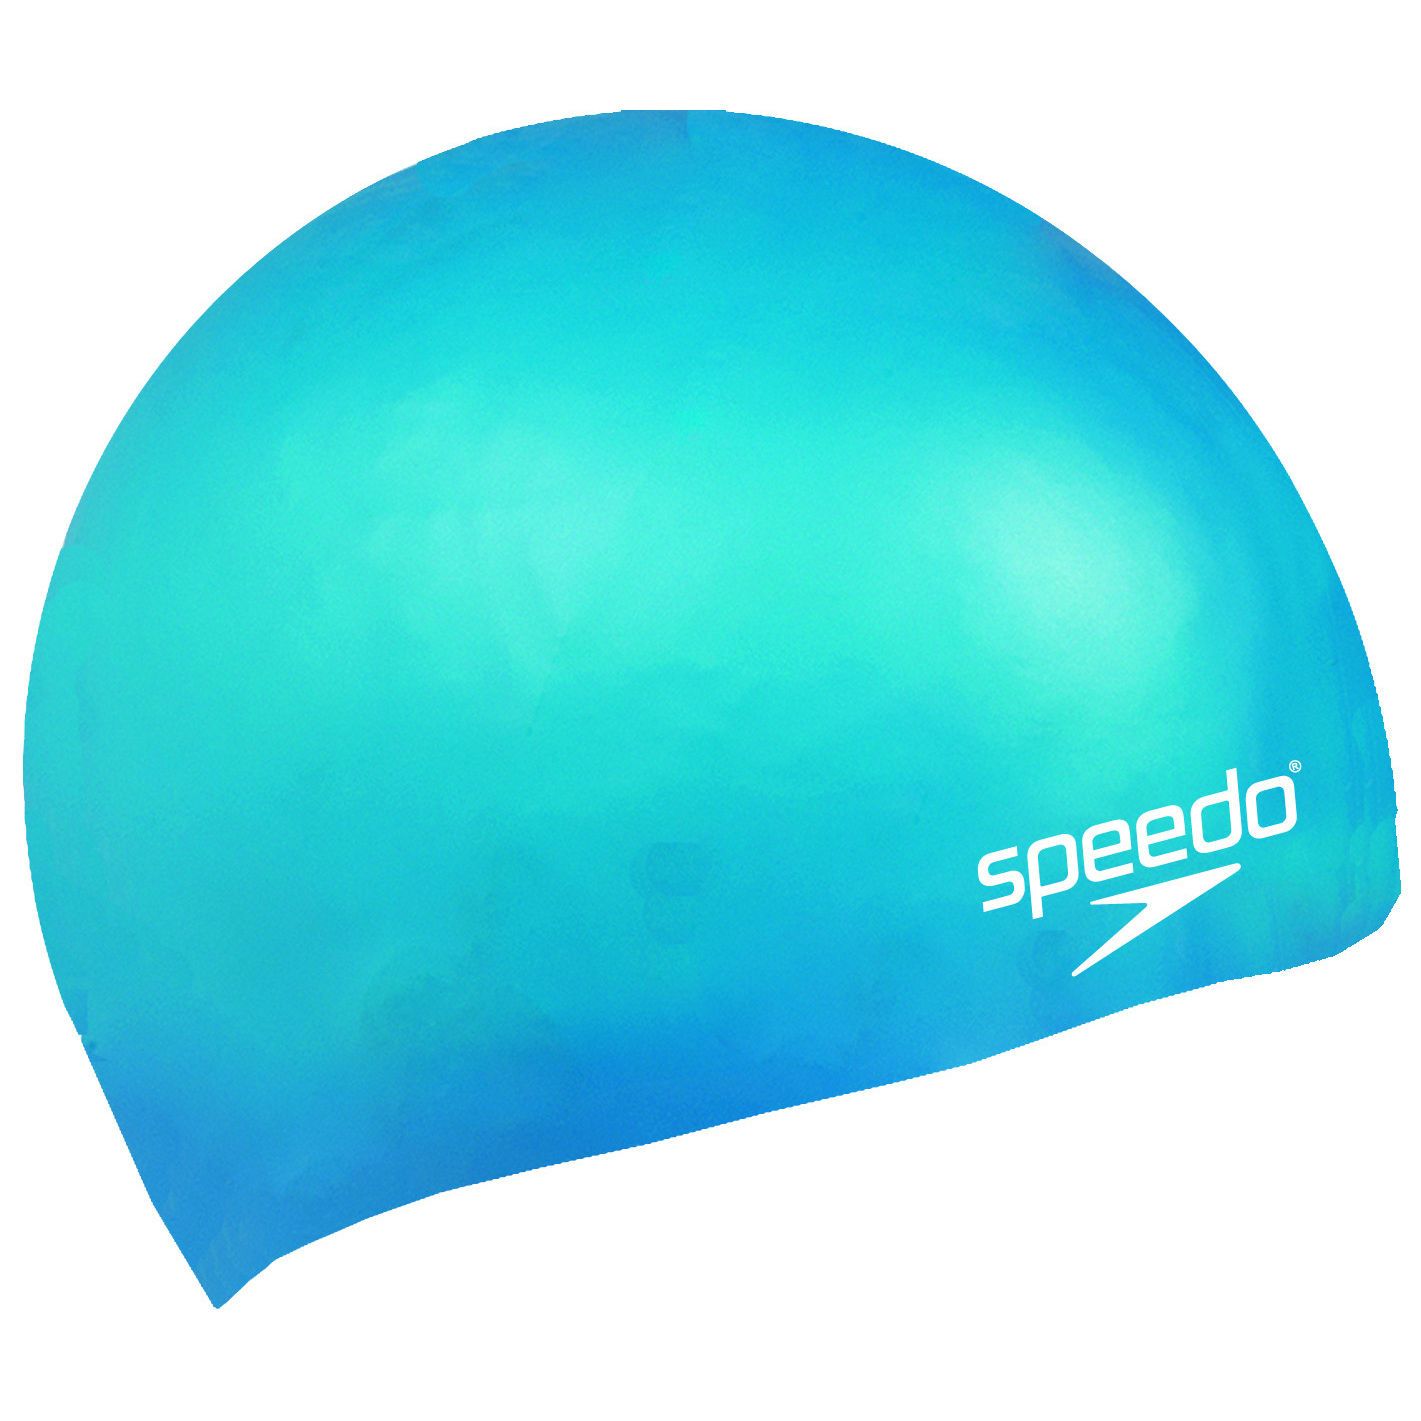  Speedo - Nón Bơi Trẻ Em Plain Moulded Silicone Junior (Xanh Biển) 